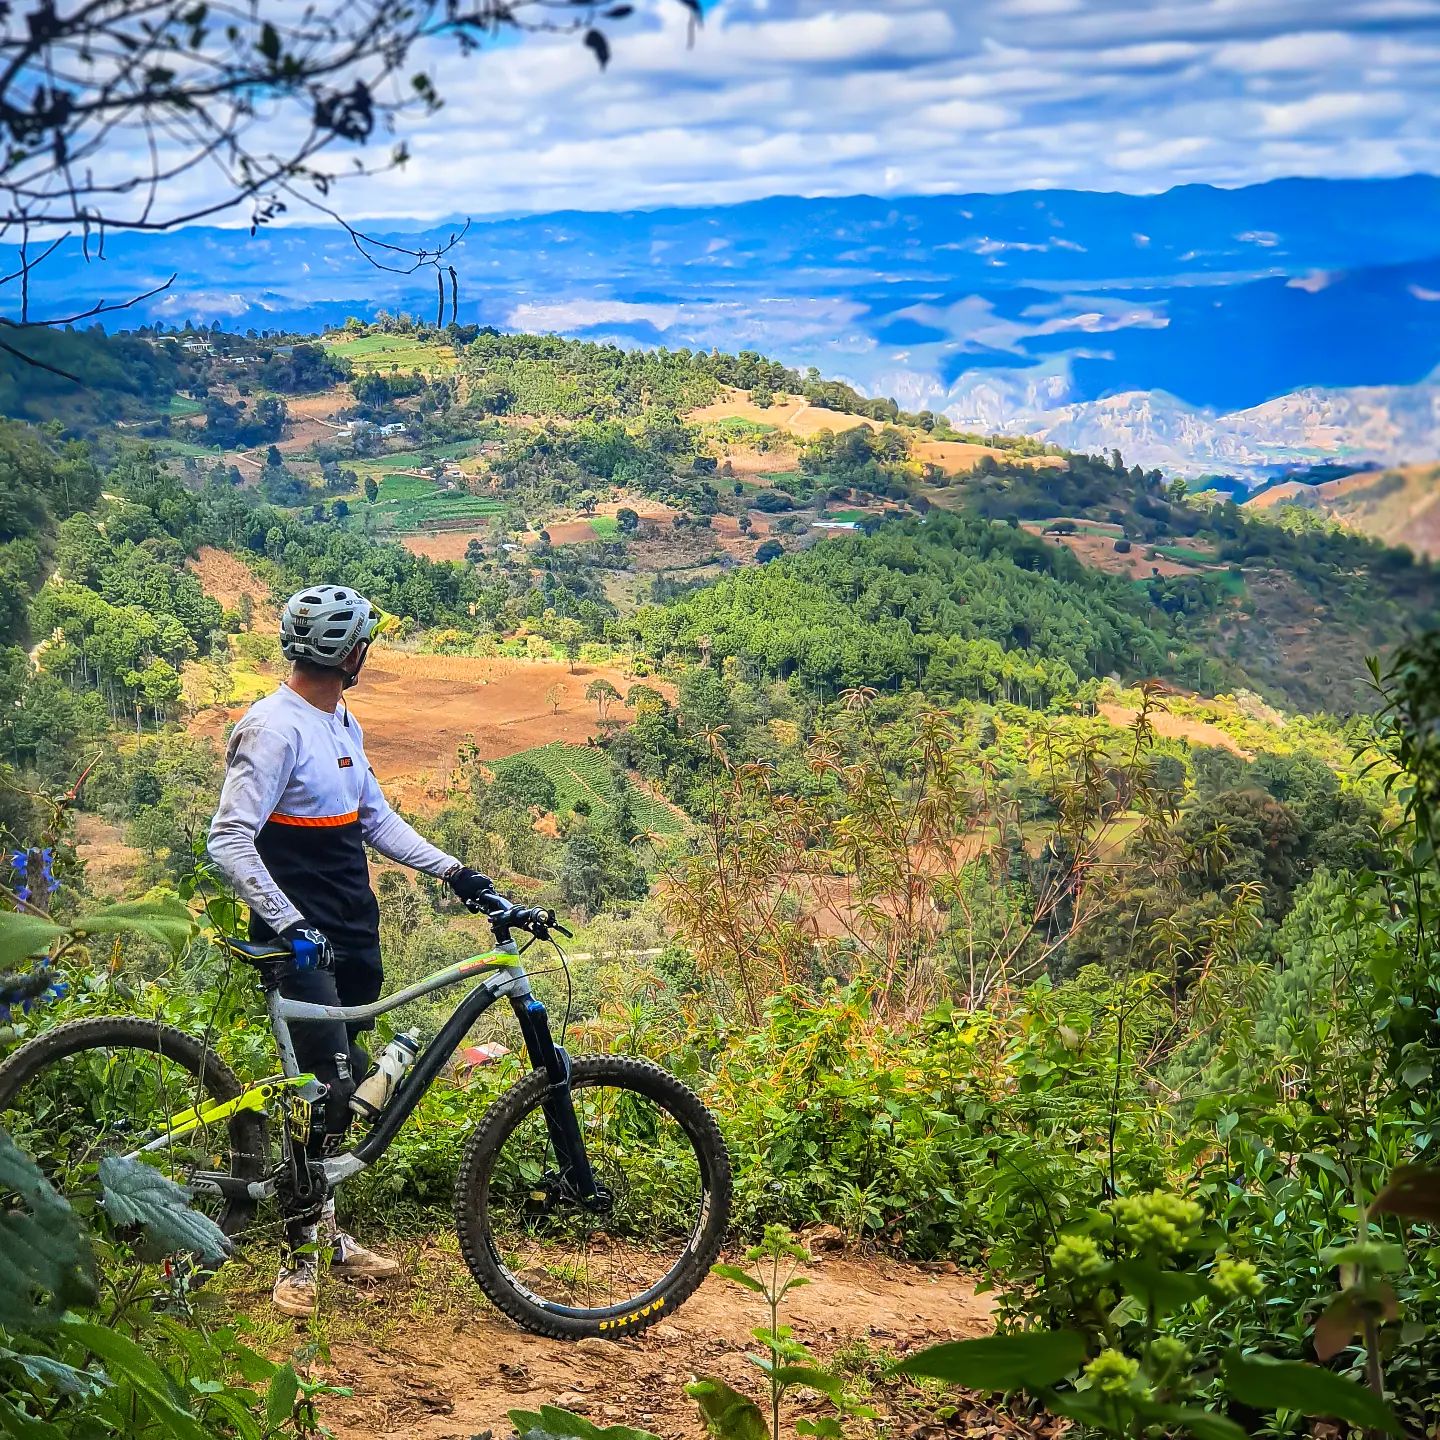 El otro lado de #tecpanguatemala .Rutas hacia el río Motagua #mtblife #mtbtours #gorideyourbike #mtbtravel #mtbguide #biketours #visitguatemala #gorideyourbike #mountainbikeguatemala #mountainbiker #mtbphotooftheday #travelguatemala #enduromtb